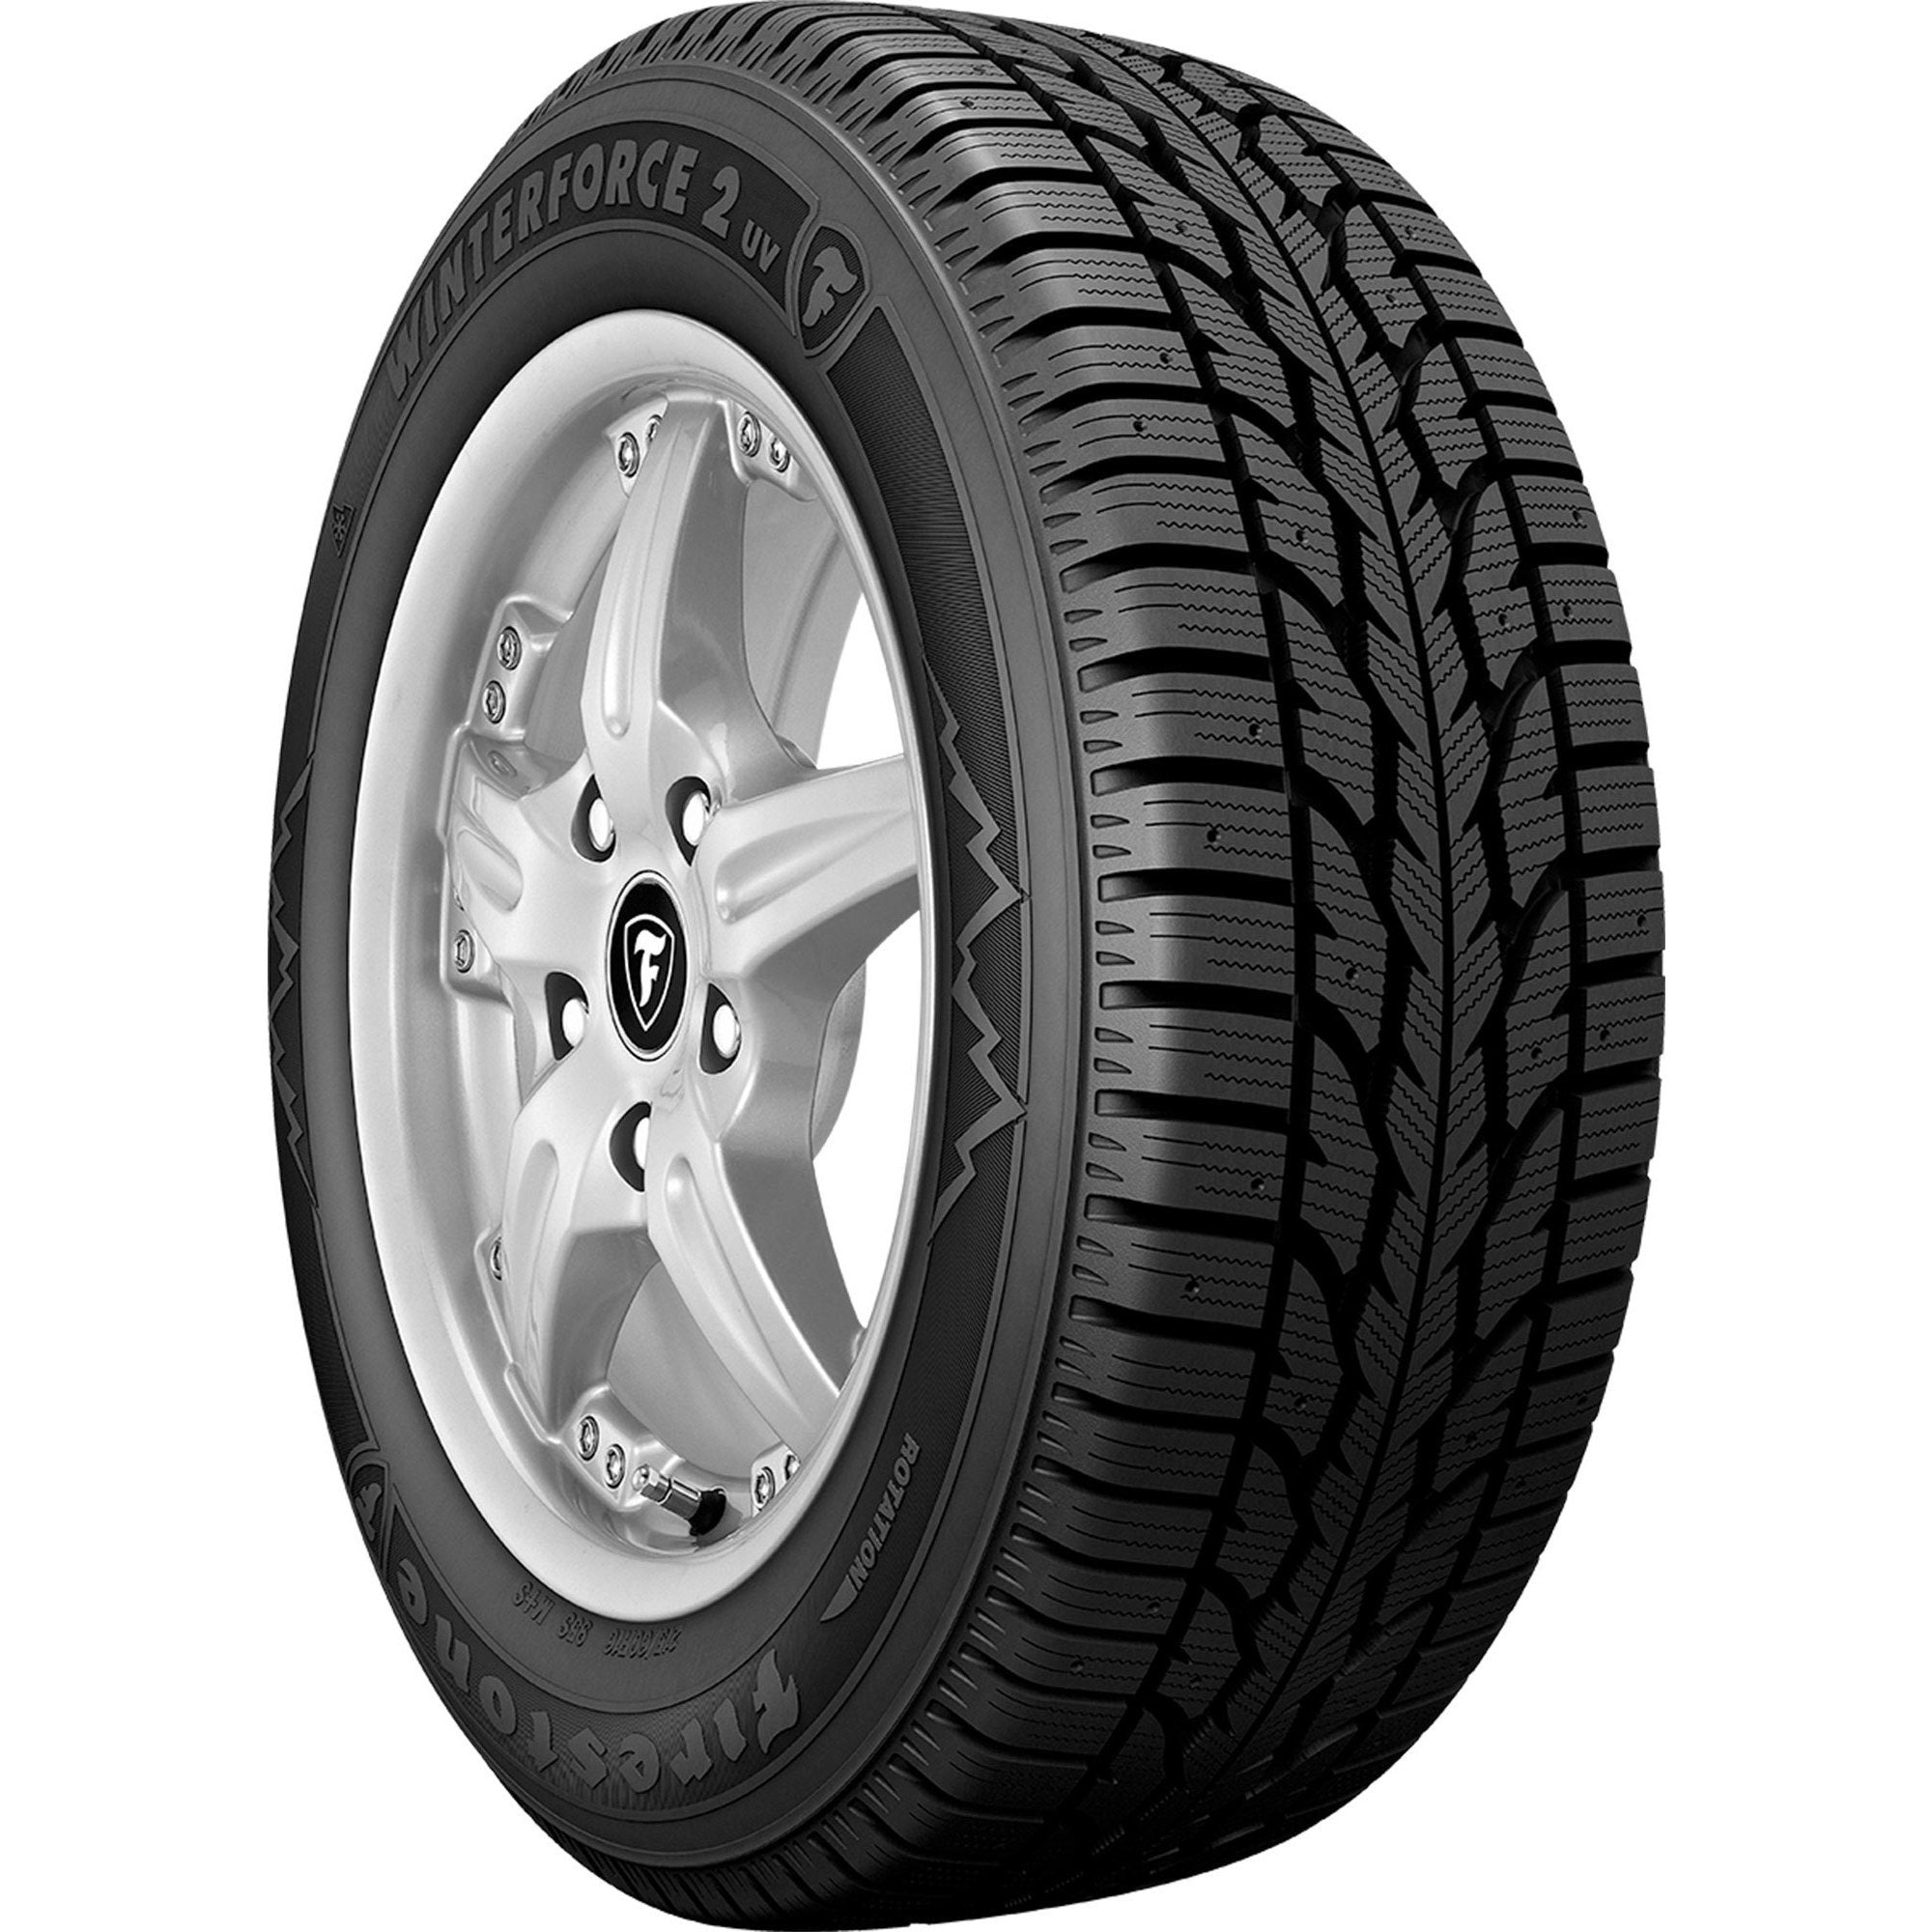 FIRESTONE WINTERFORCE2 UV 255/65R17 (30.1X10R 17) Tires